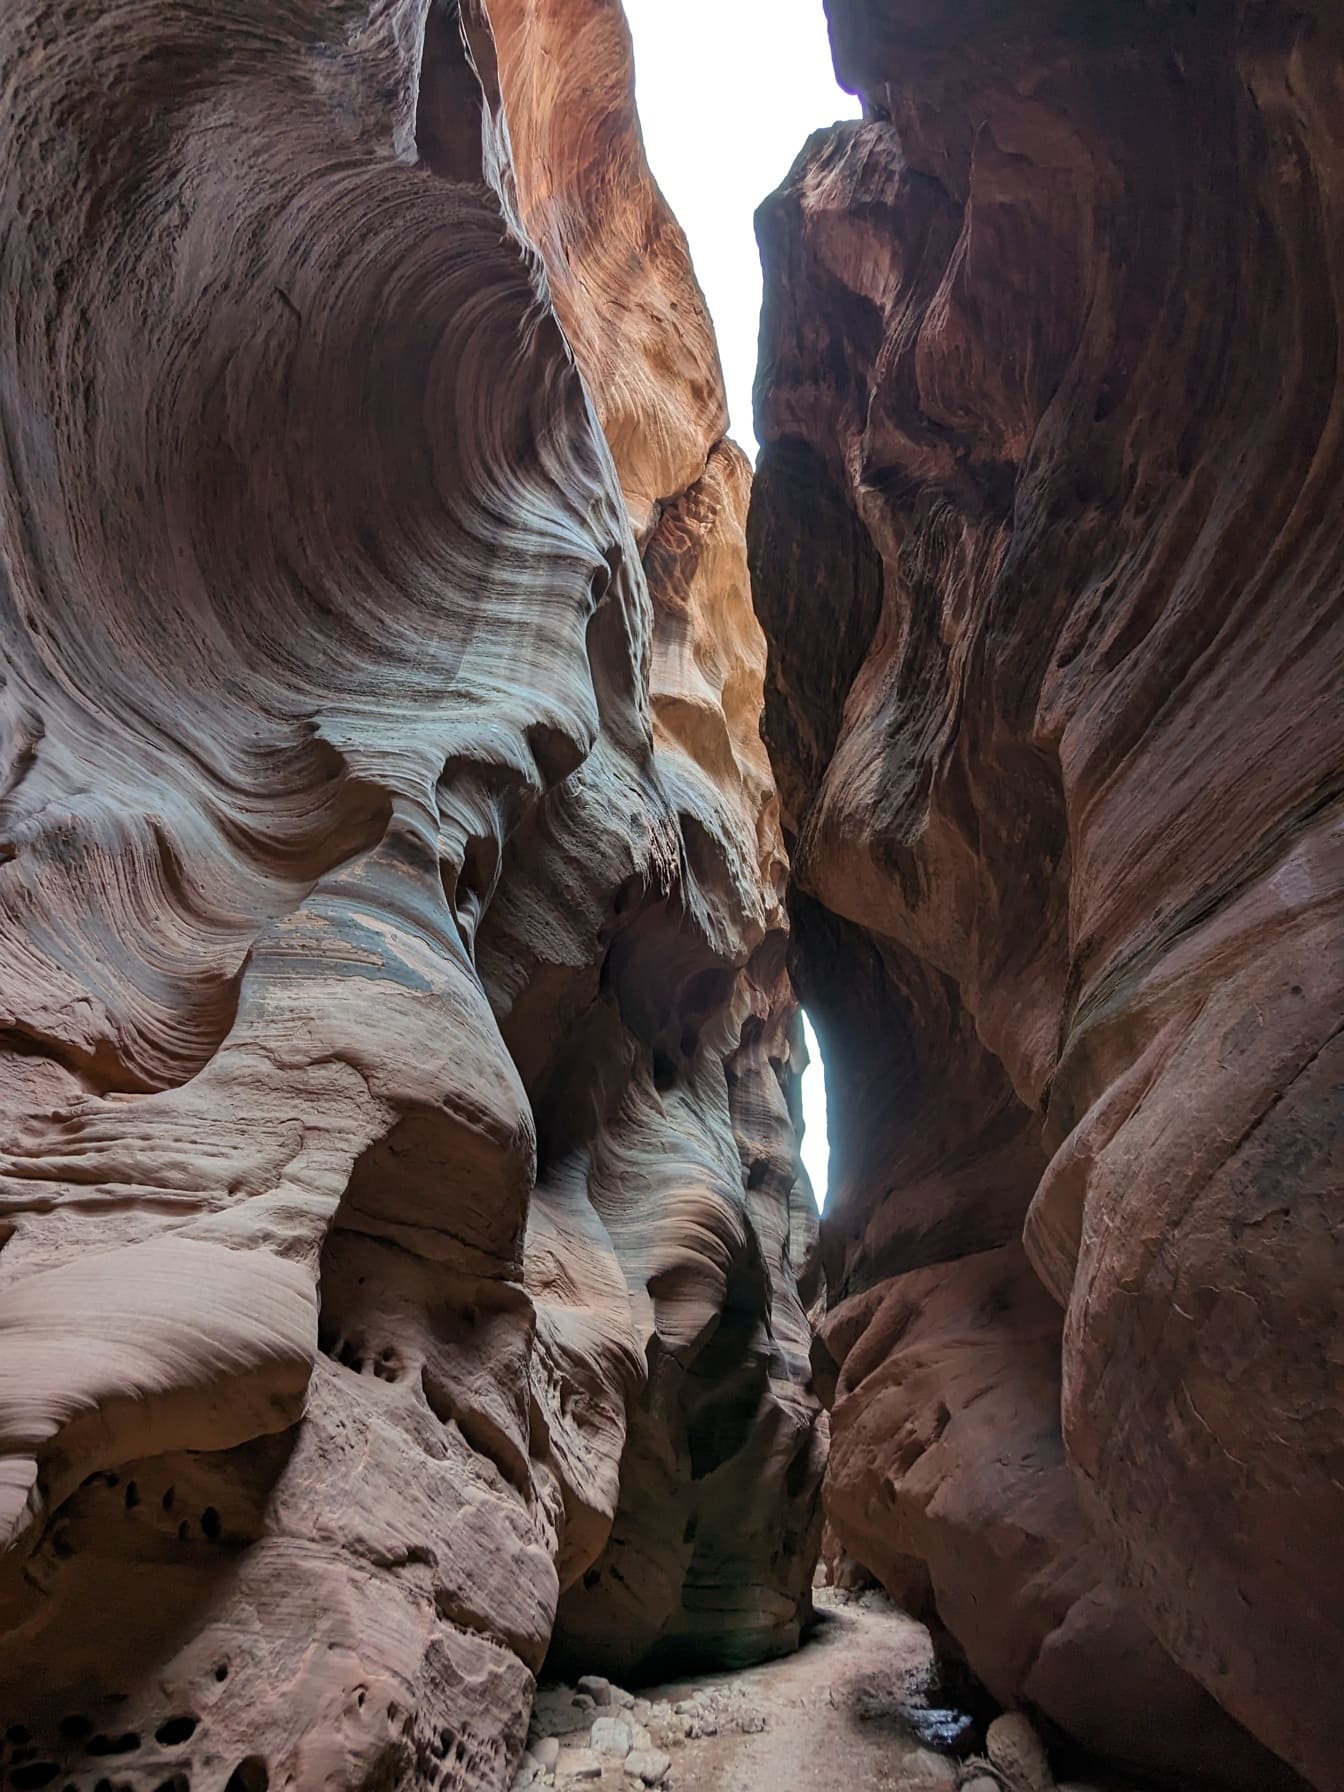 Narrow passage by sandstone erosion in desert valley